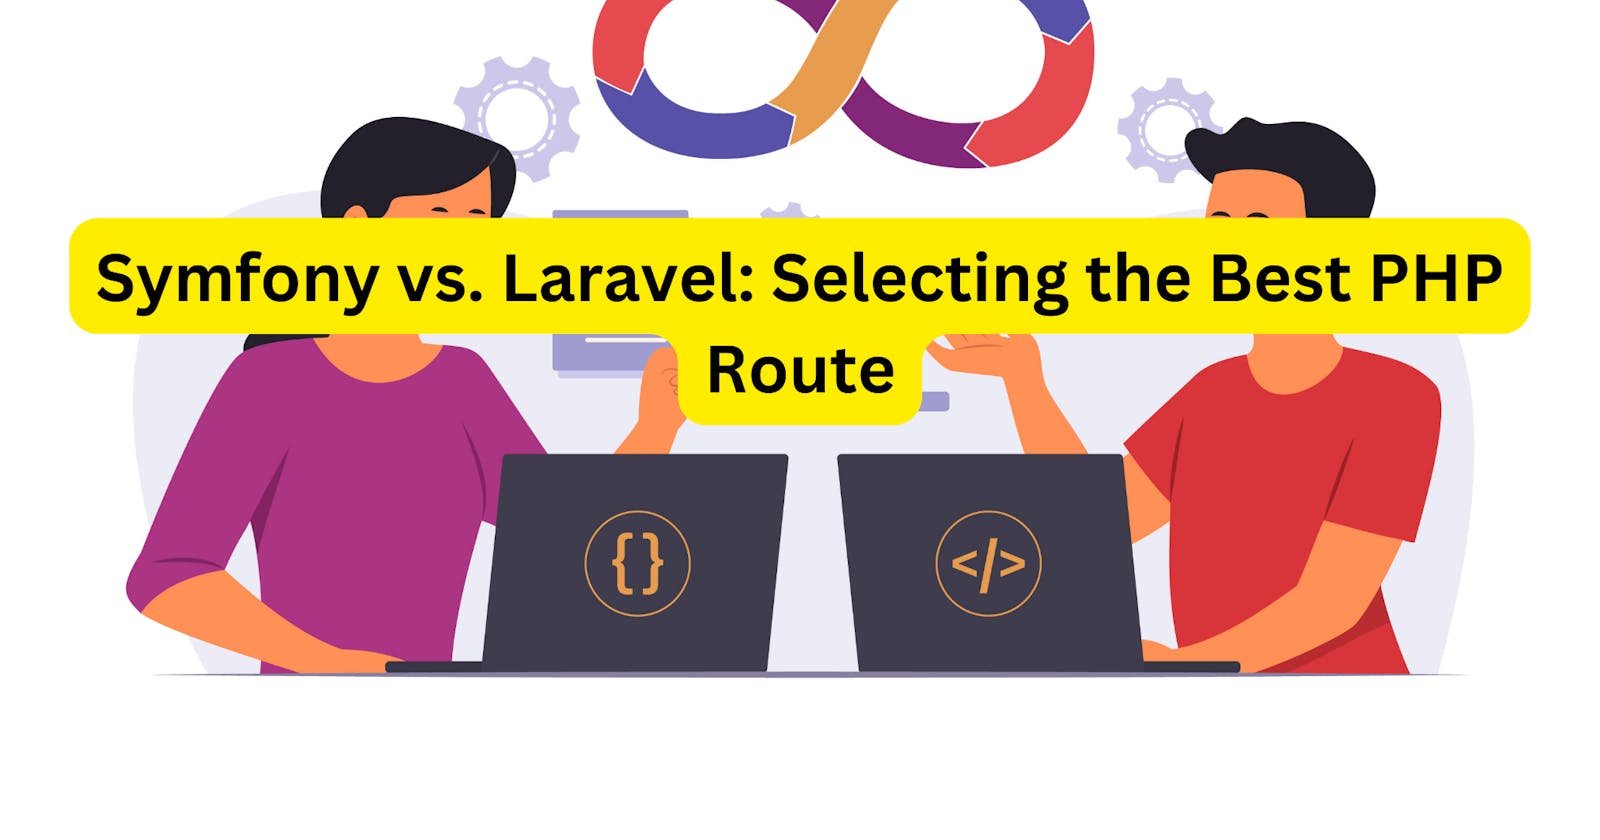 Symfony vs. Laravel: Selecting the Best PHP Route